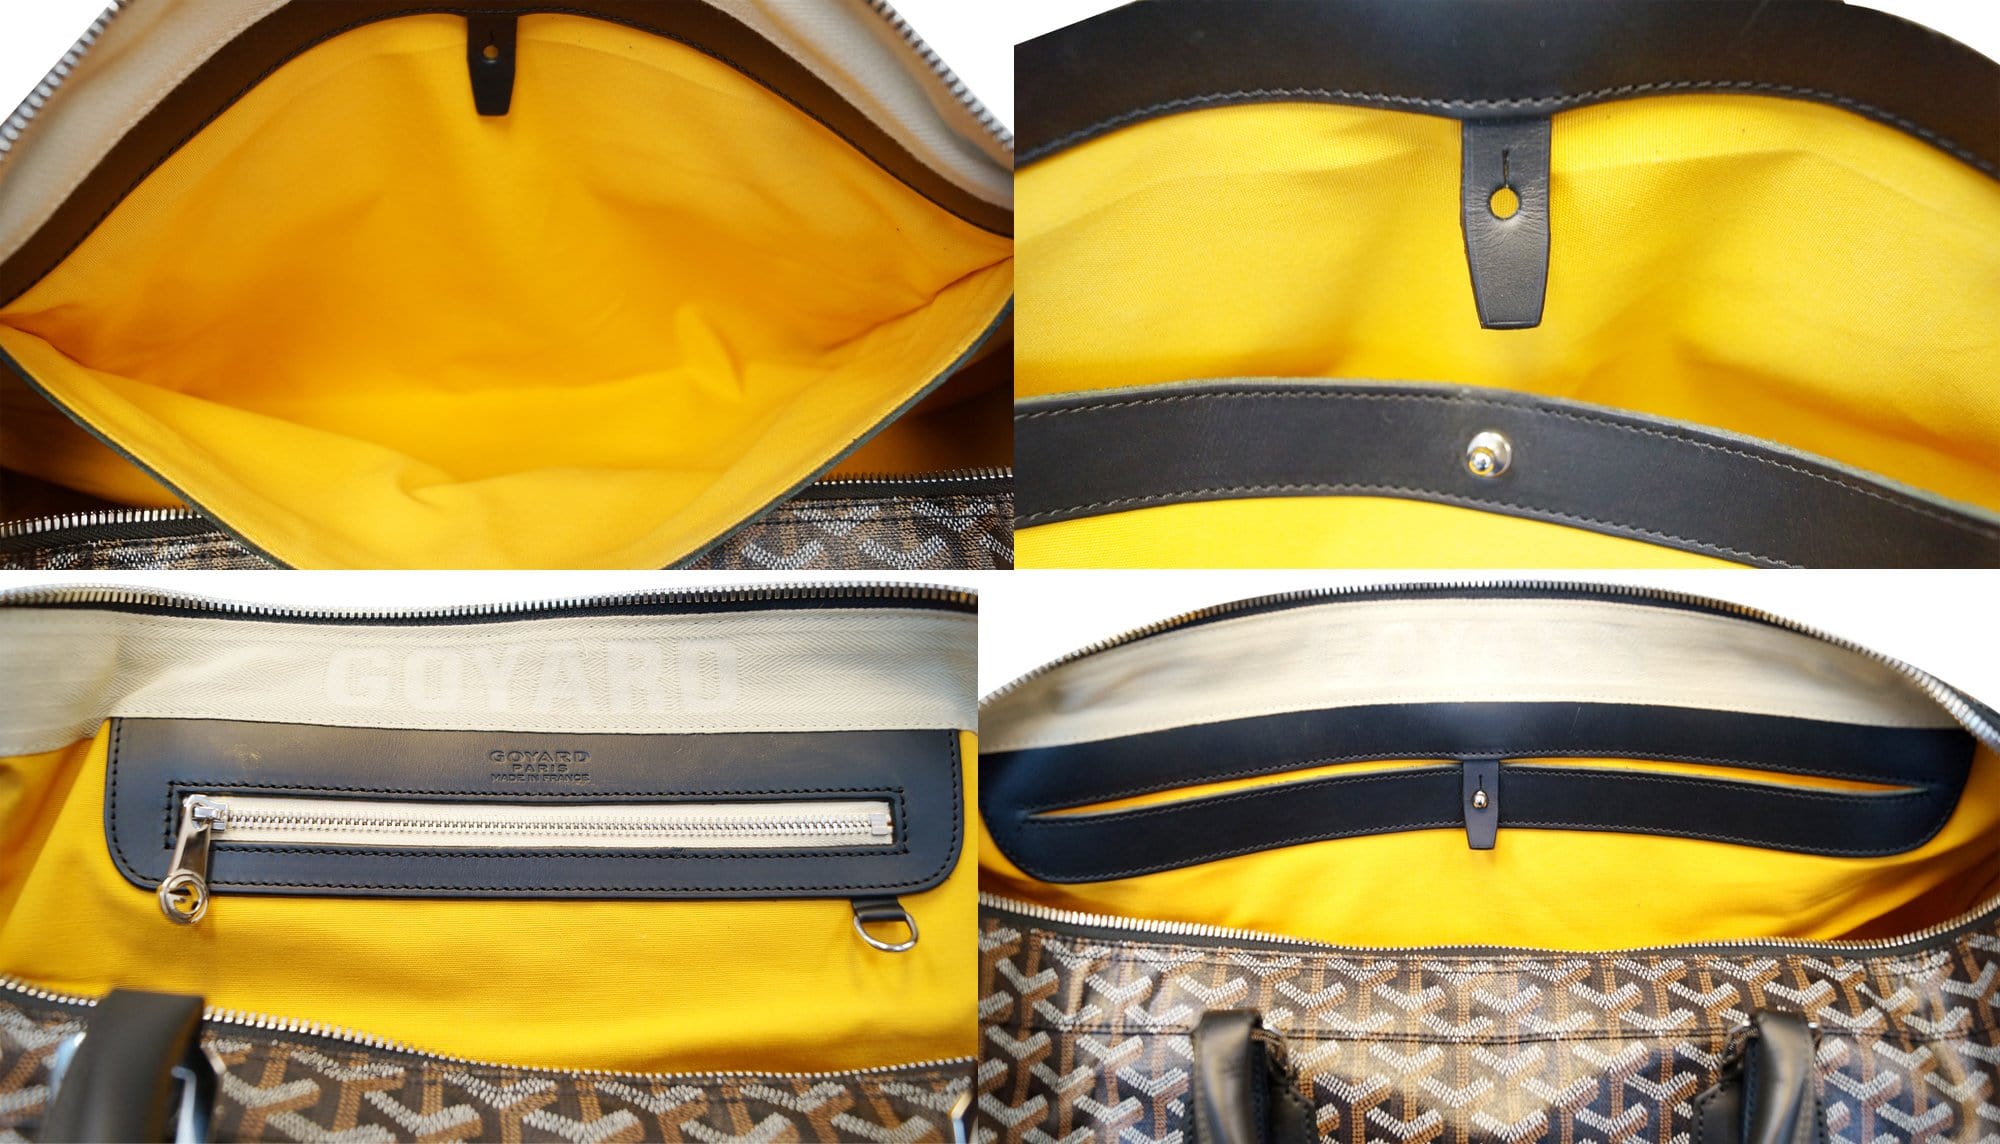 Goyard Yellow 'Croisiere 35' Bag